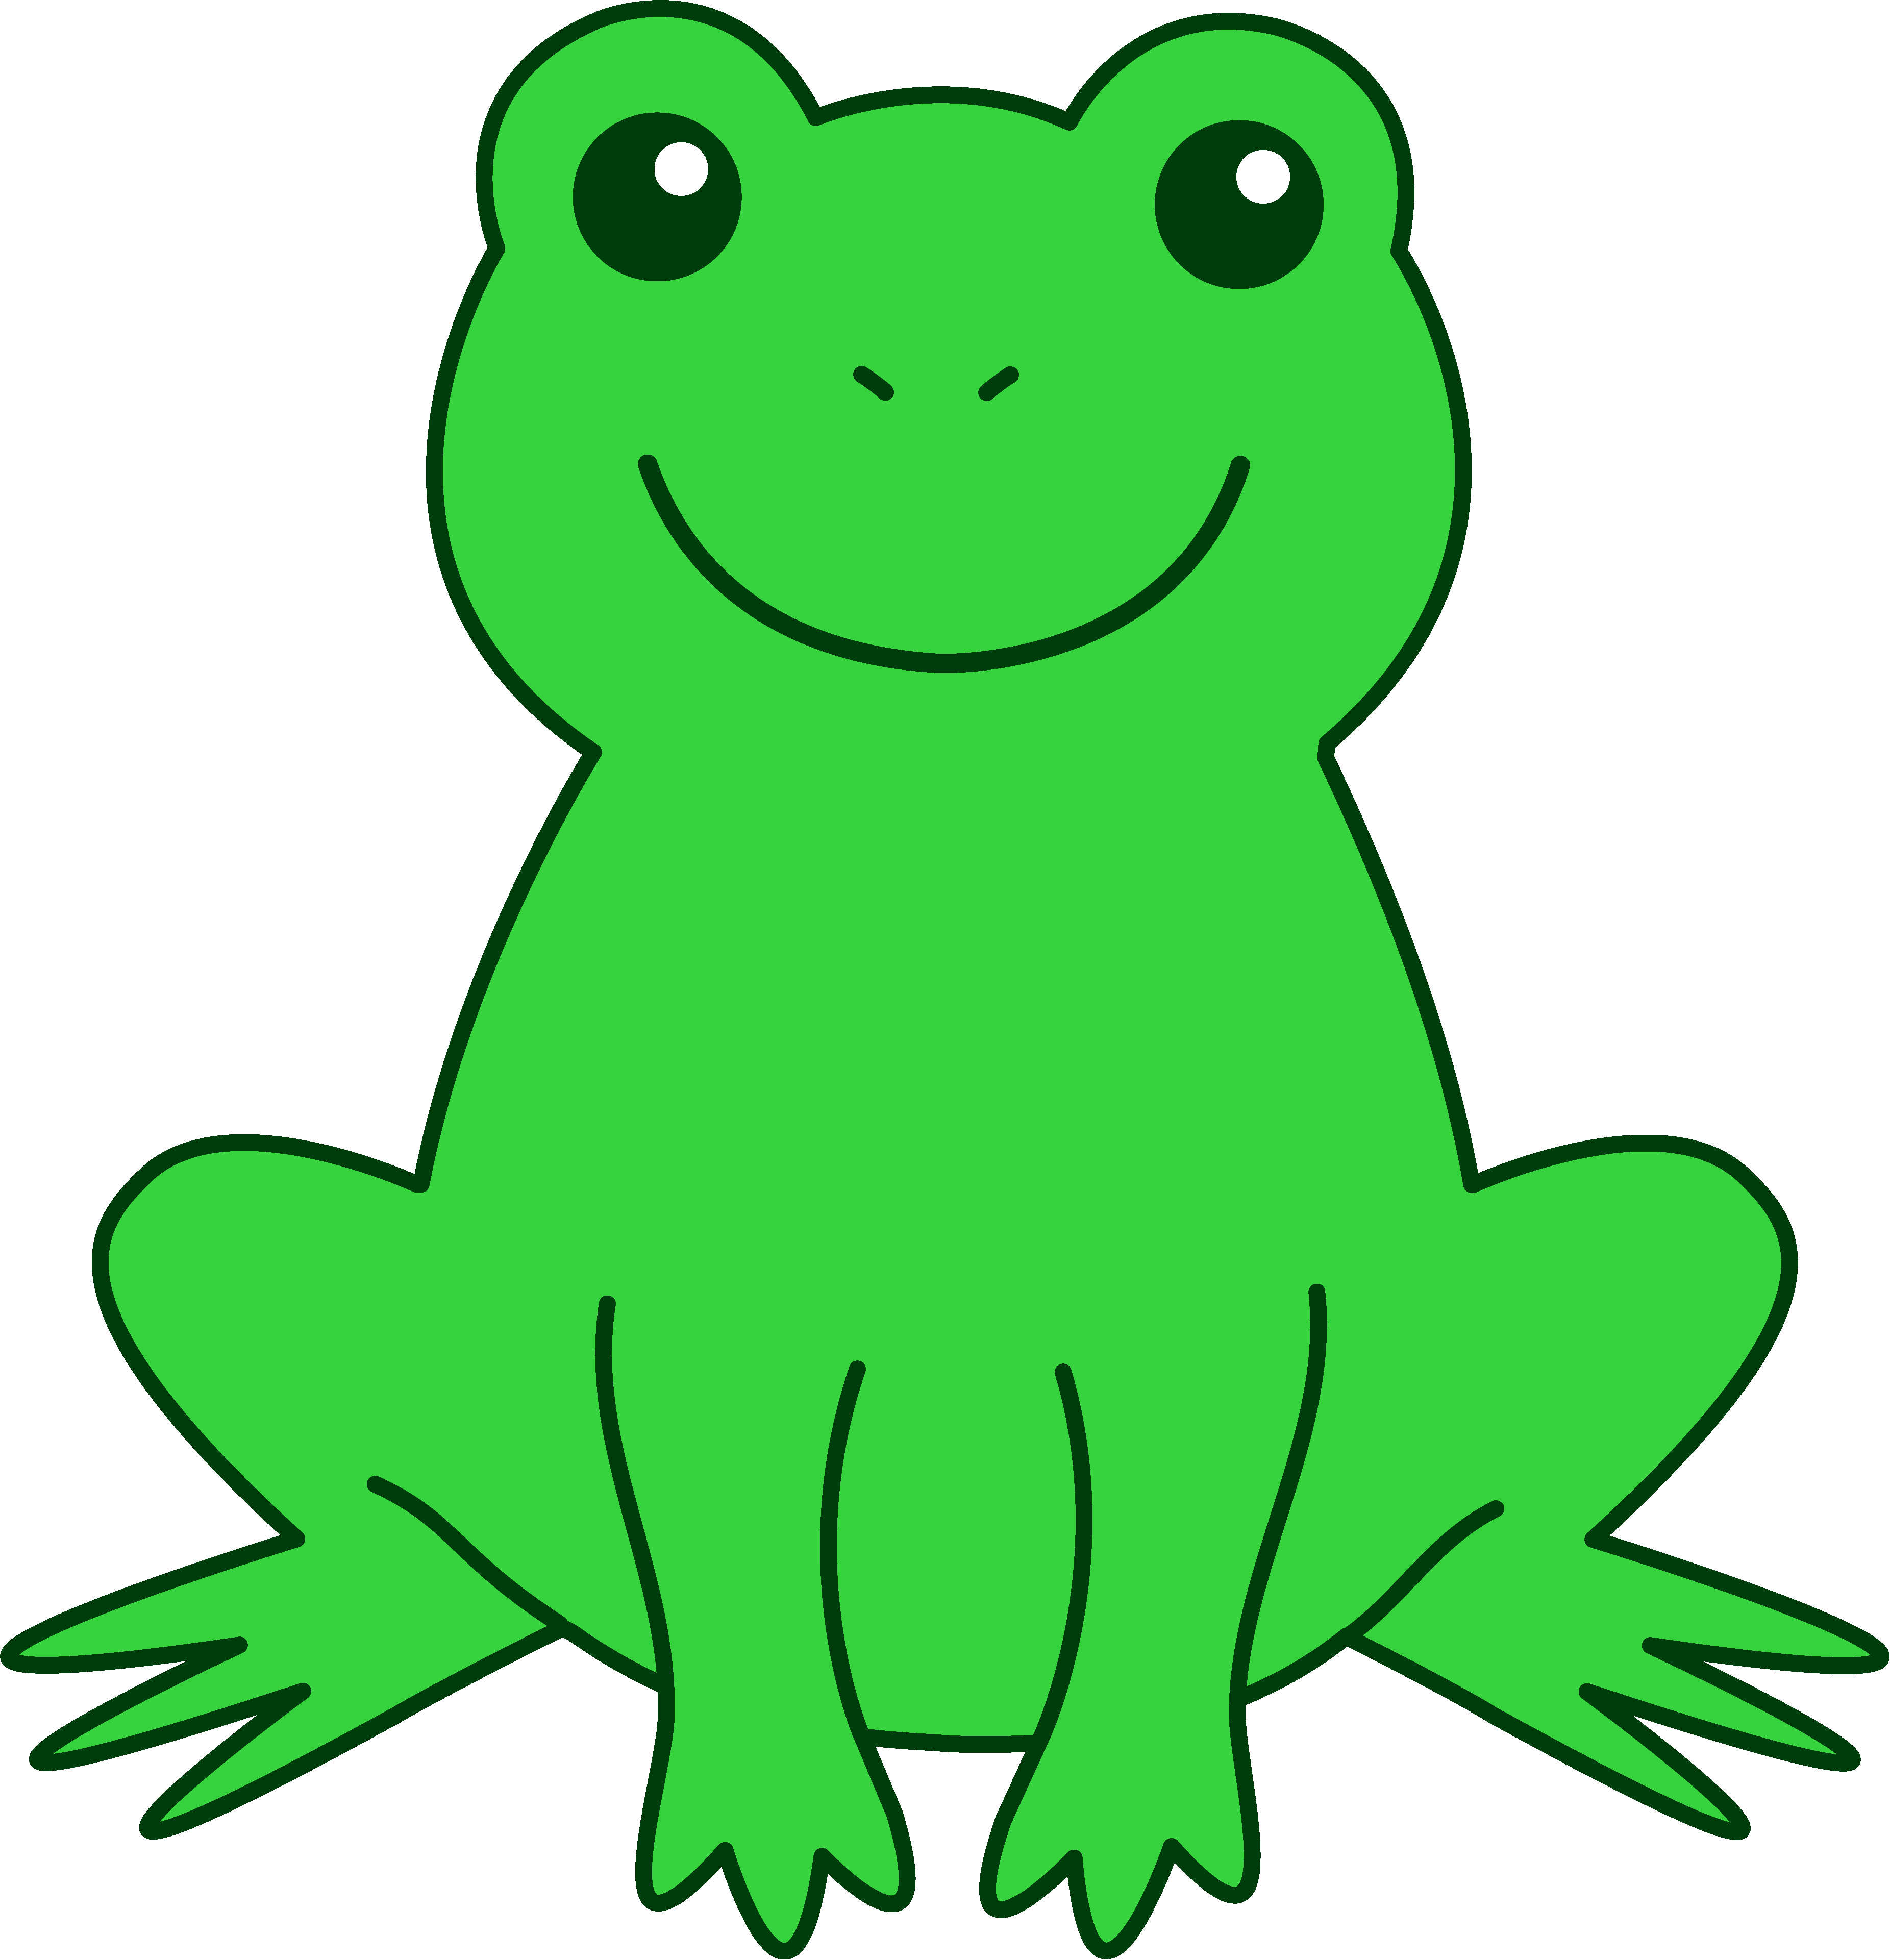 5 Frogs Cartoon - ClipArt Best